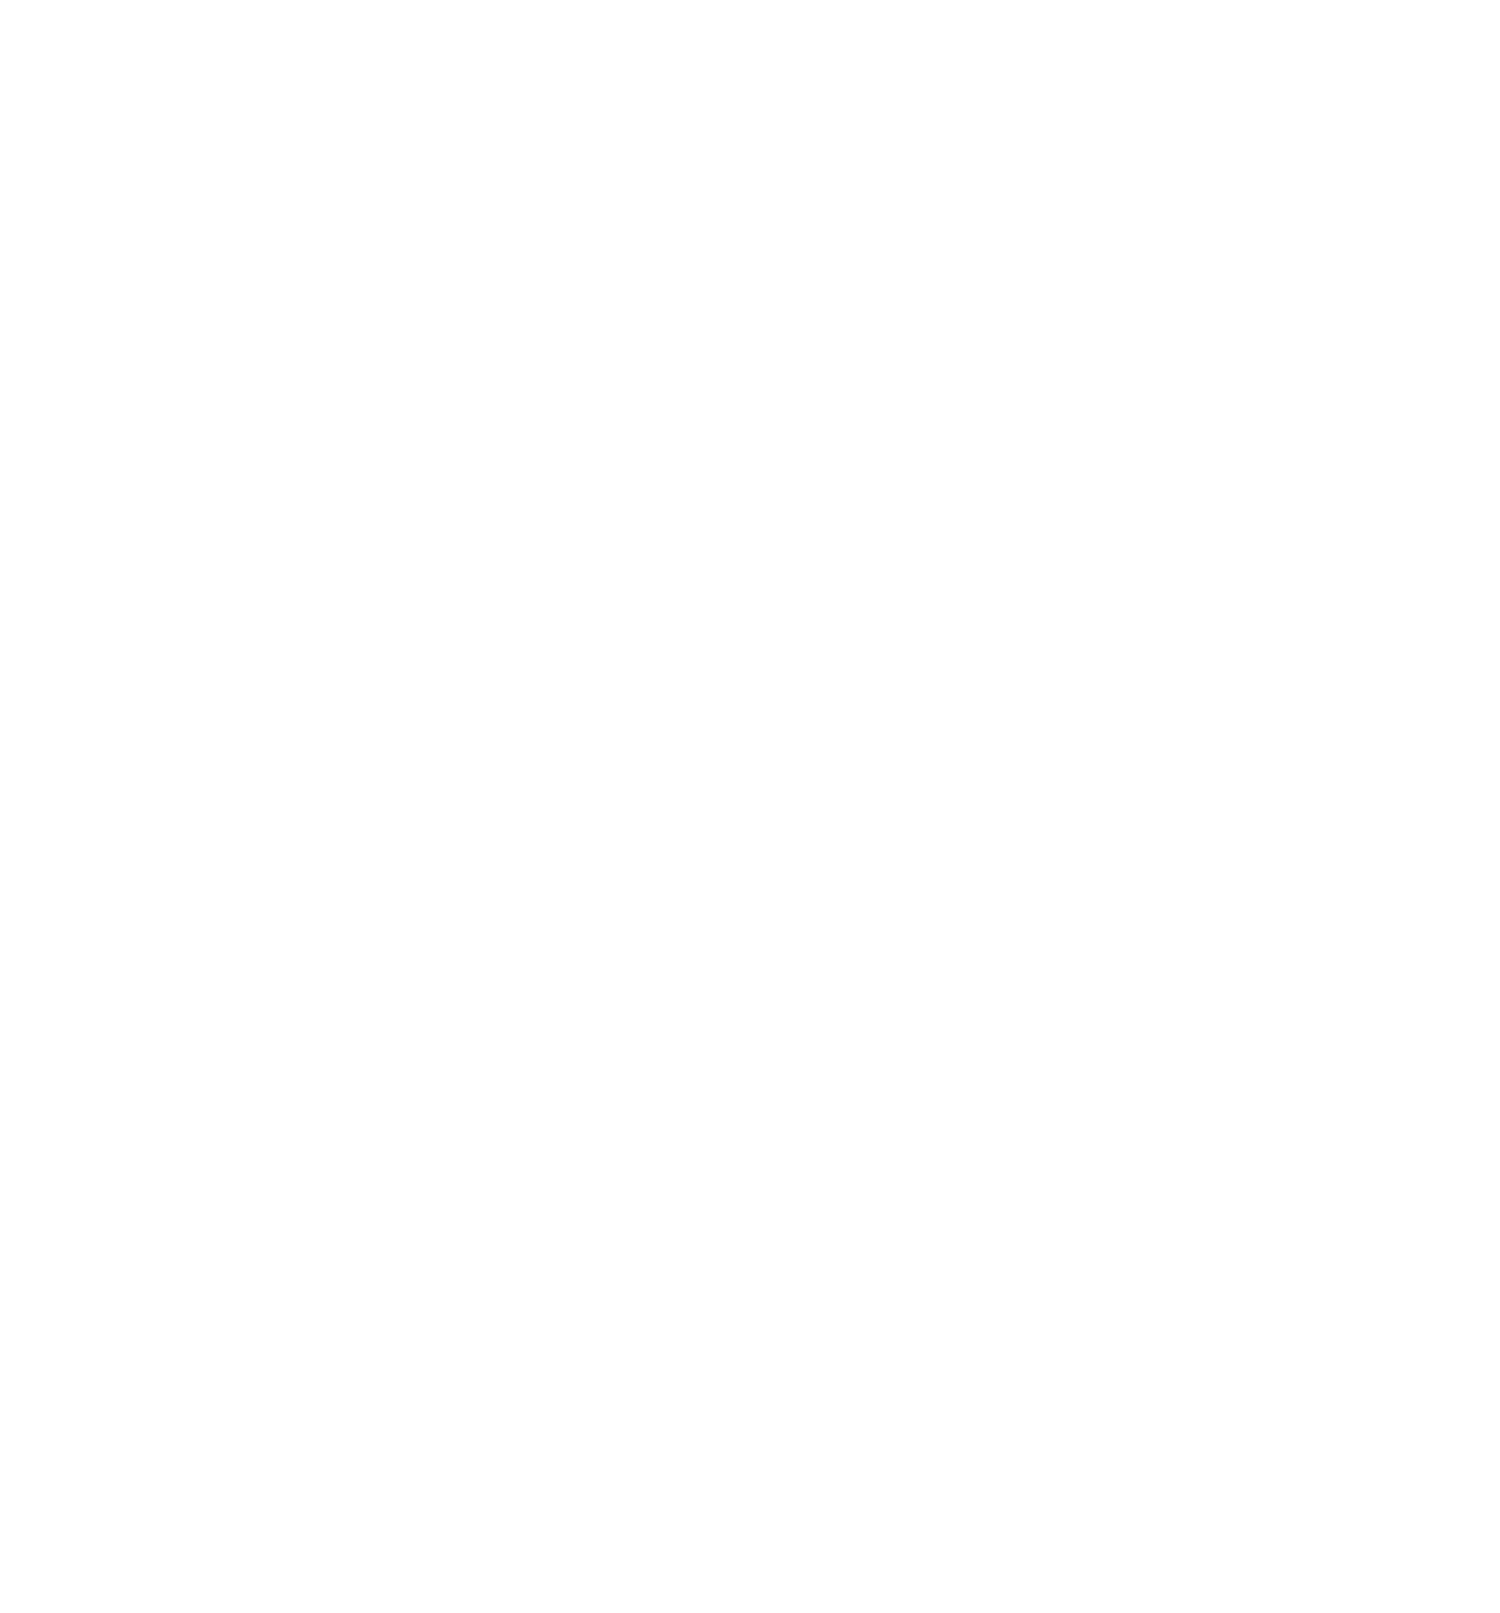 CMRCenter